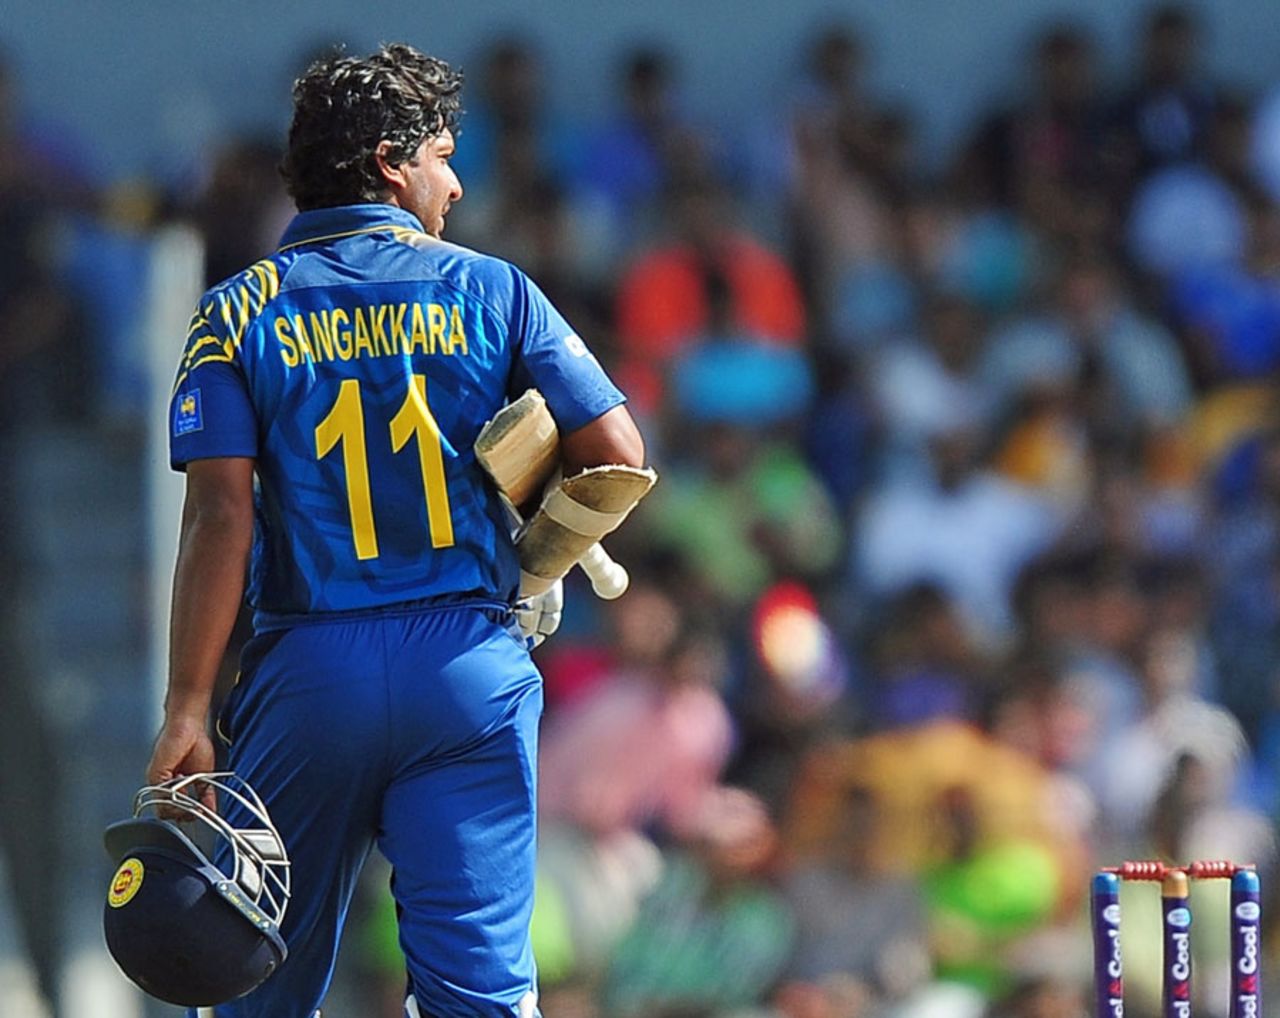 Kumar Sangakkara walks back after being dismissed for 11, Sri Lanka v Pakistan, 2nd ODI, Hambantota, August 26, 2014